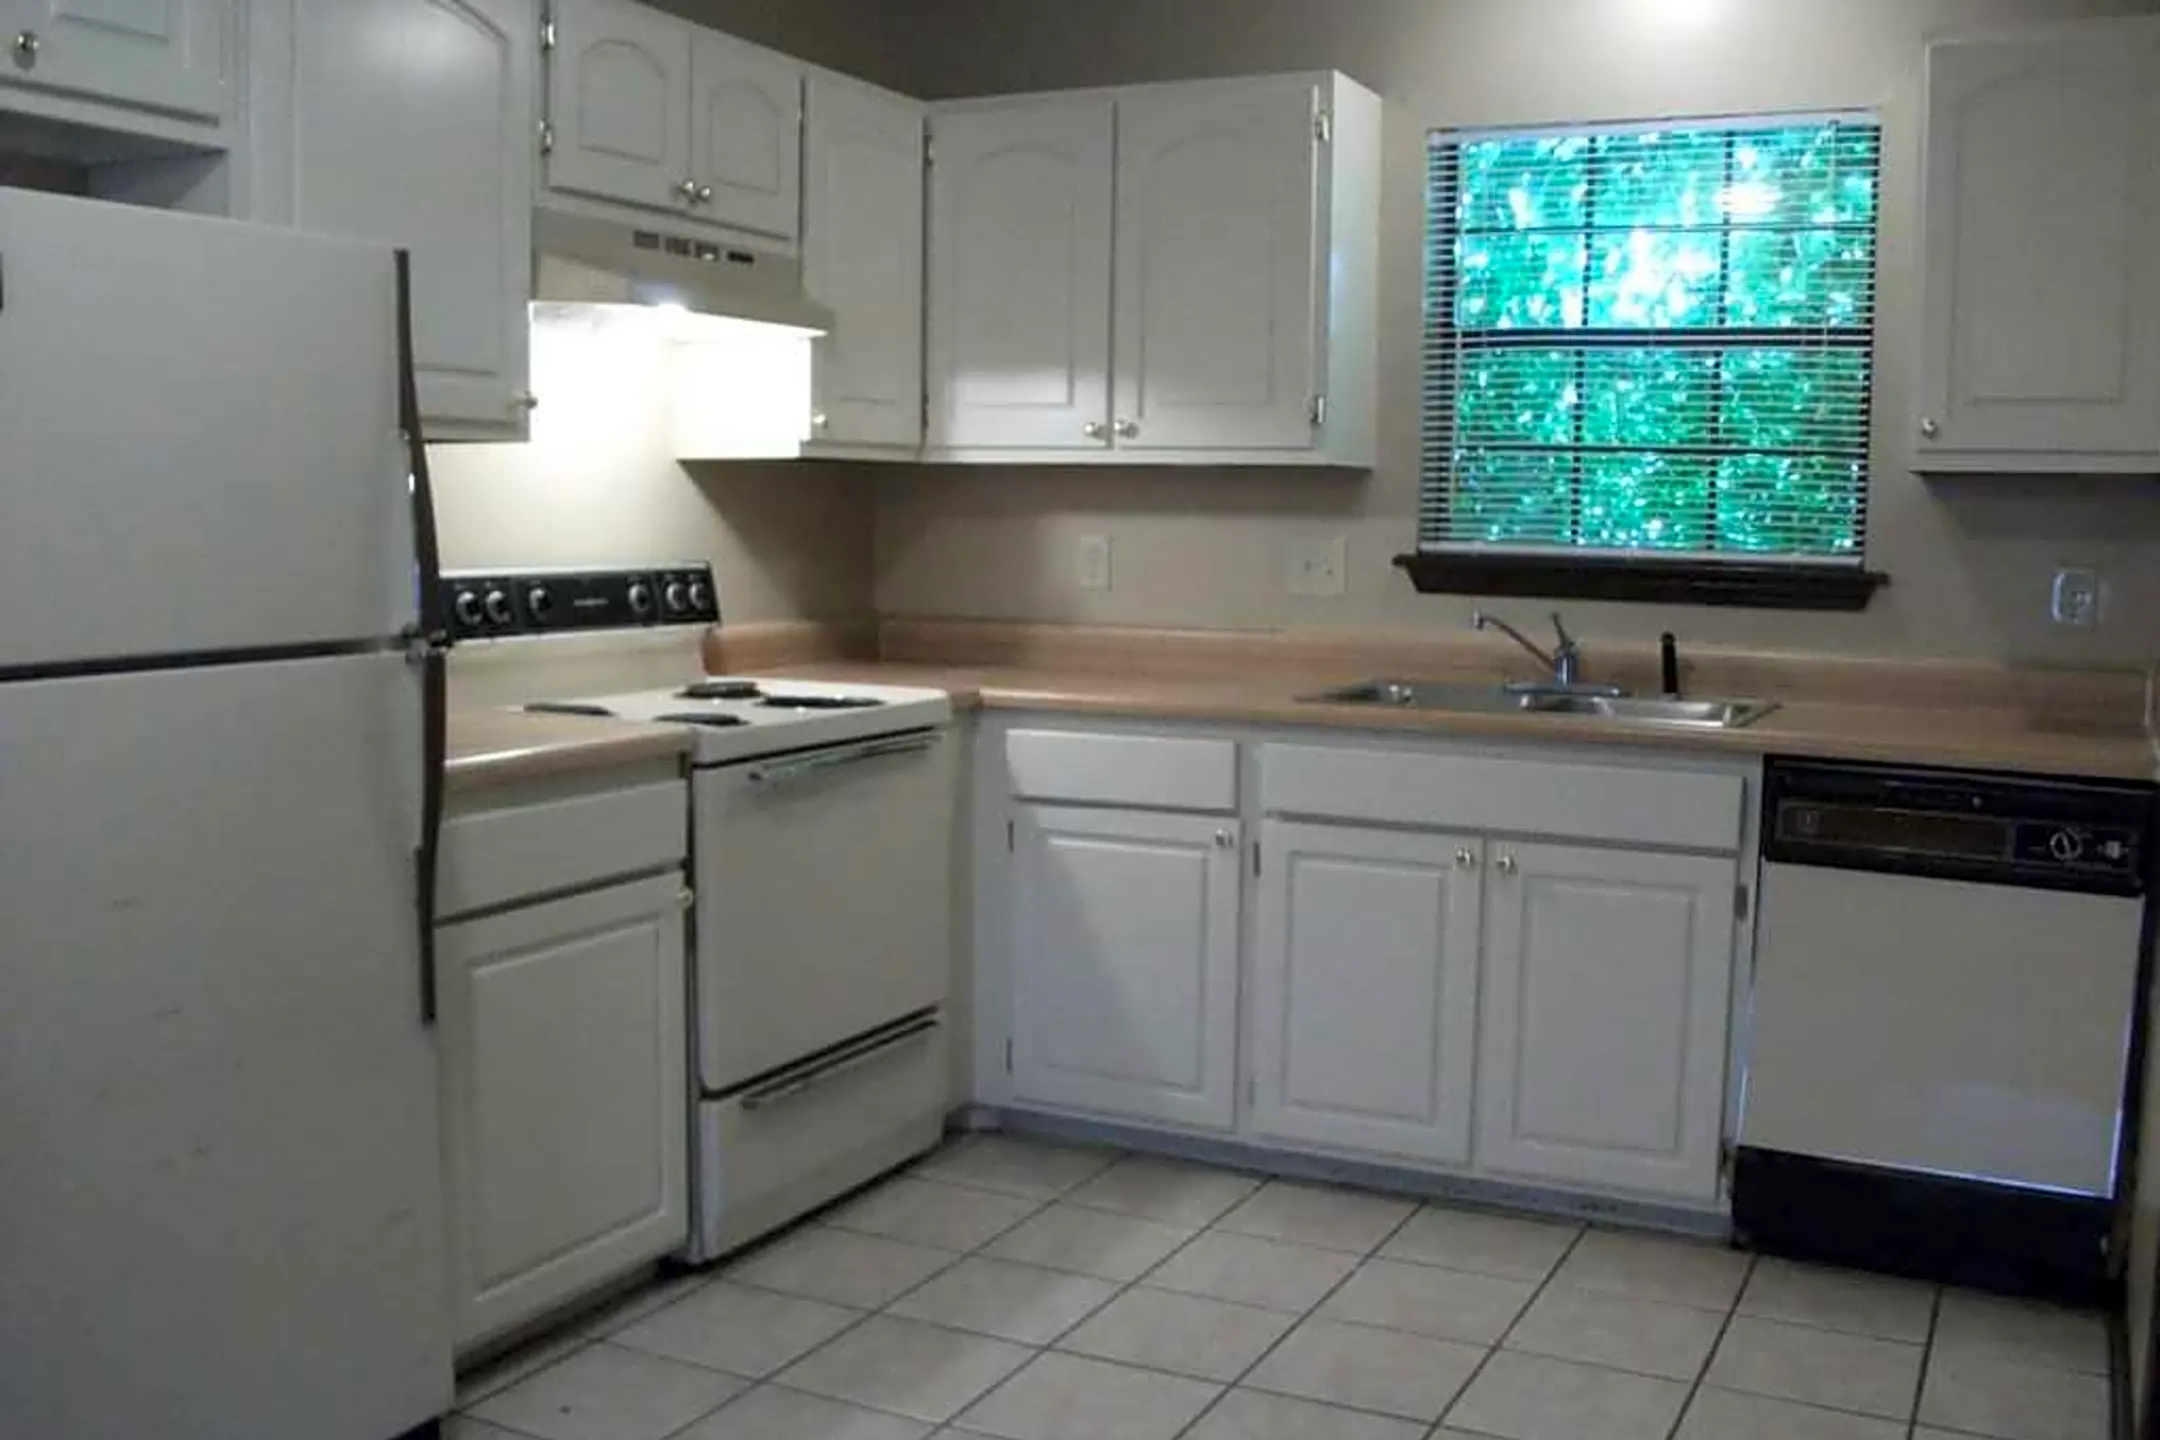 Kitchen - Garry Lewis Properties - Baton Rouge, LA